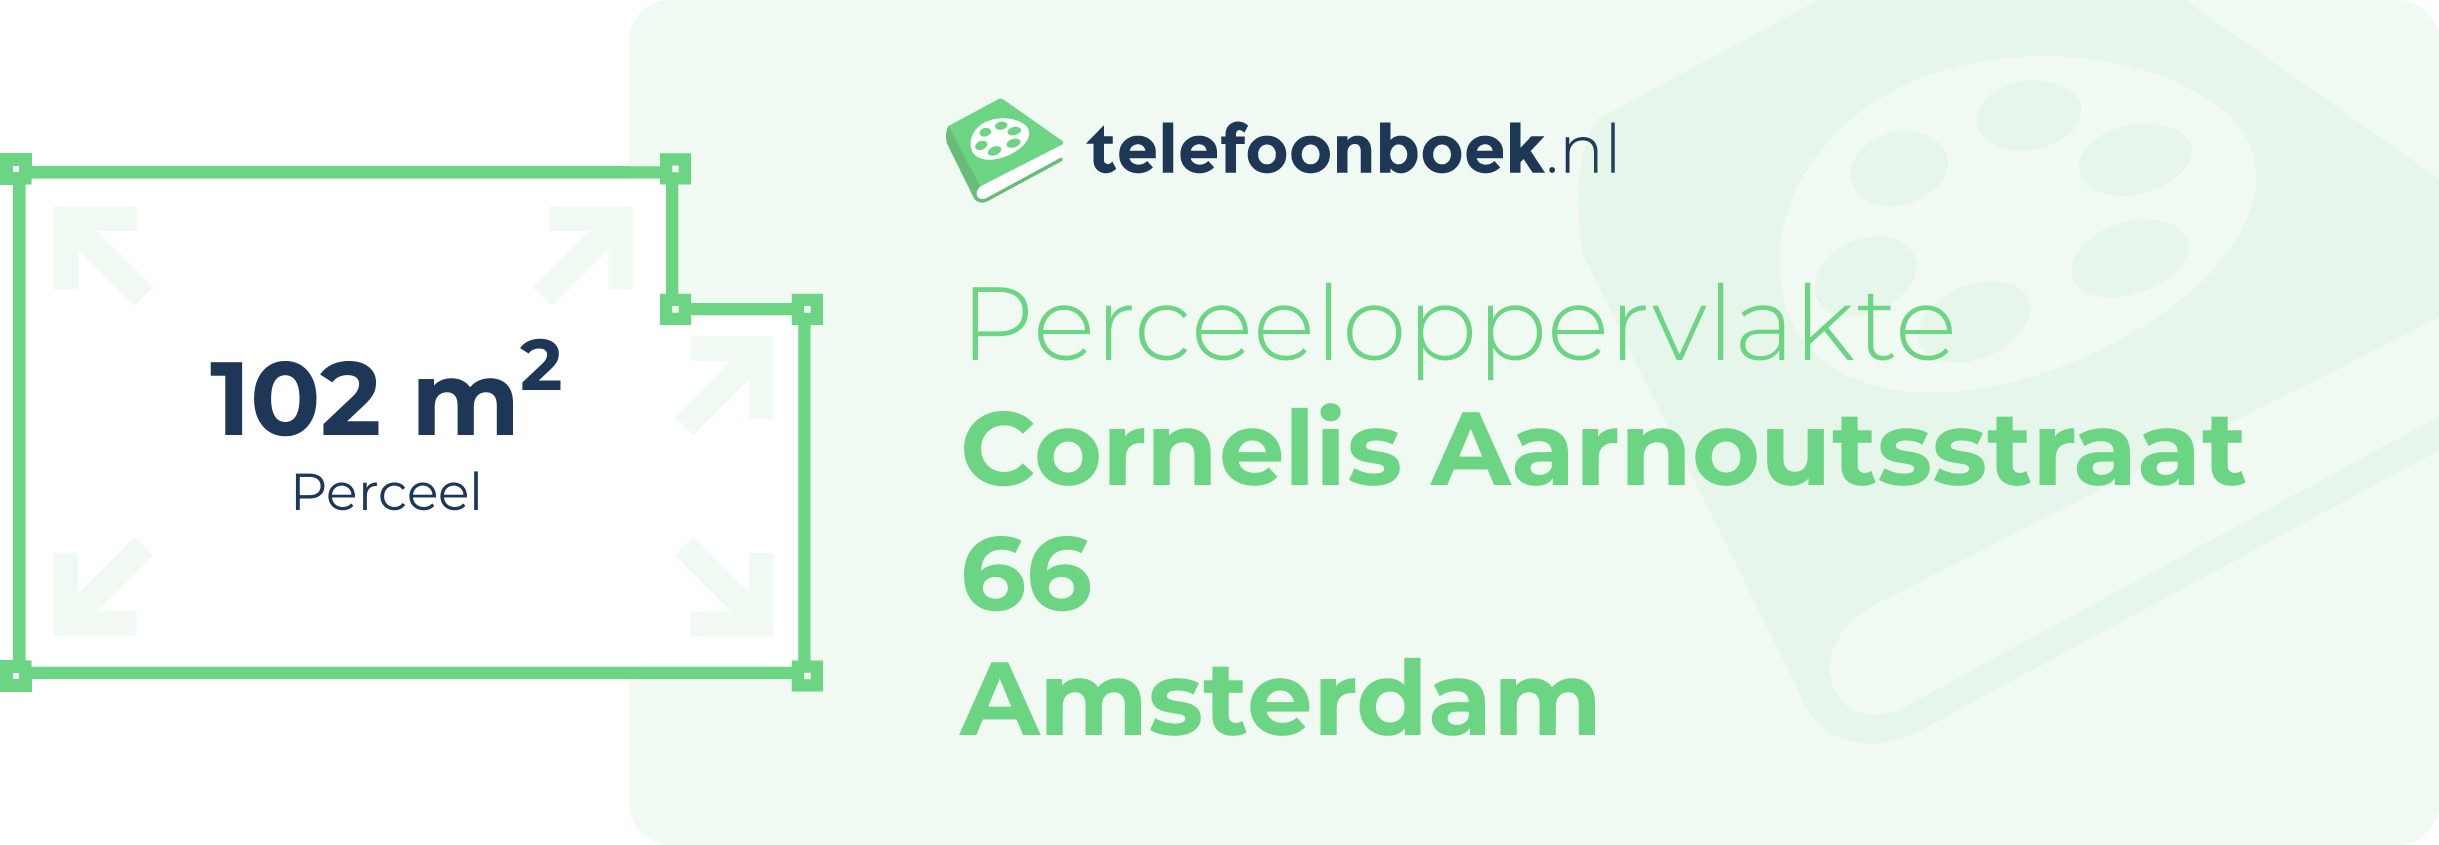 Perceeloppervlakte Cornelis Aarnoutsstraat 66 Amsterdam